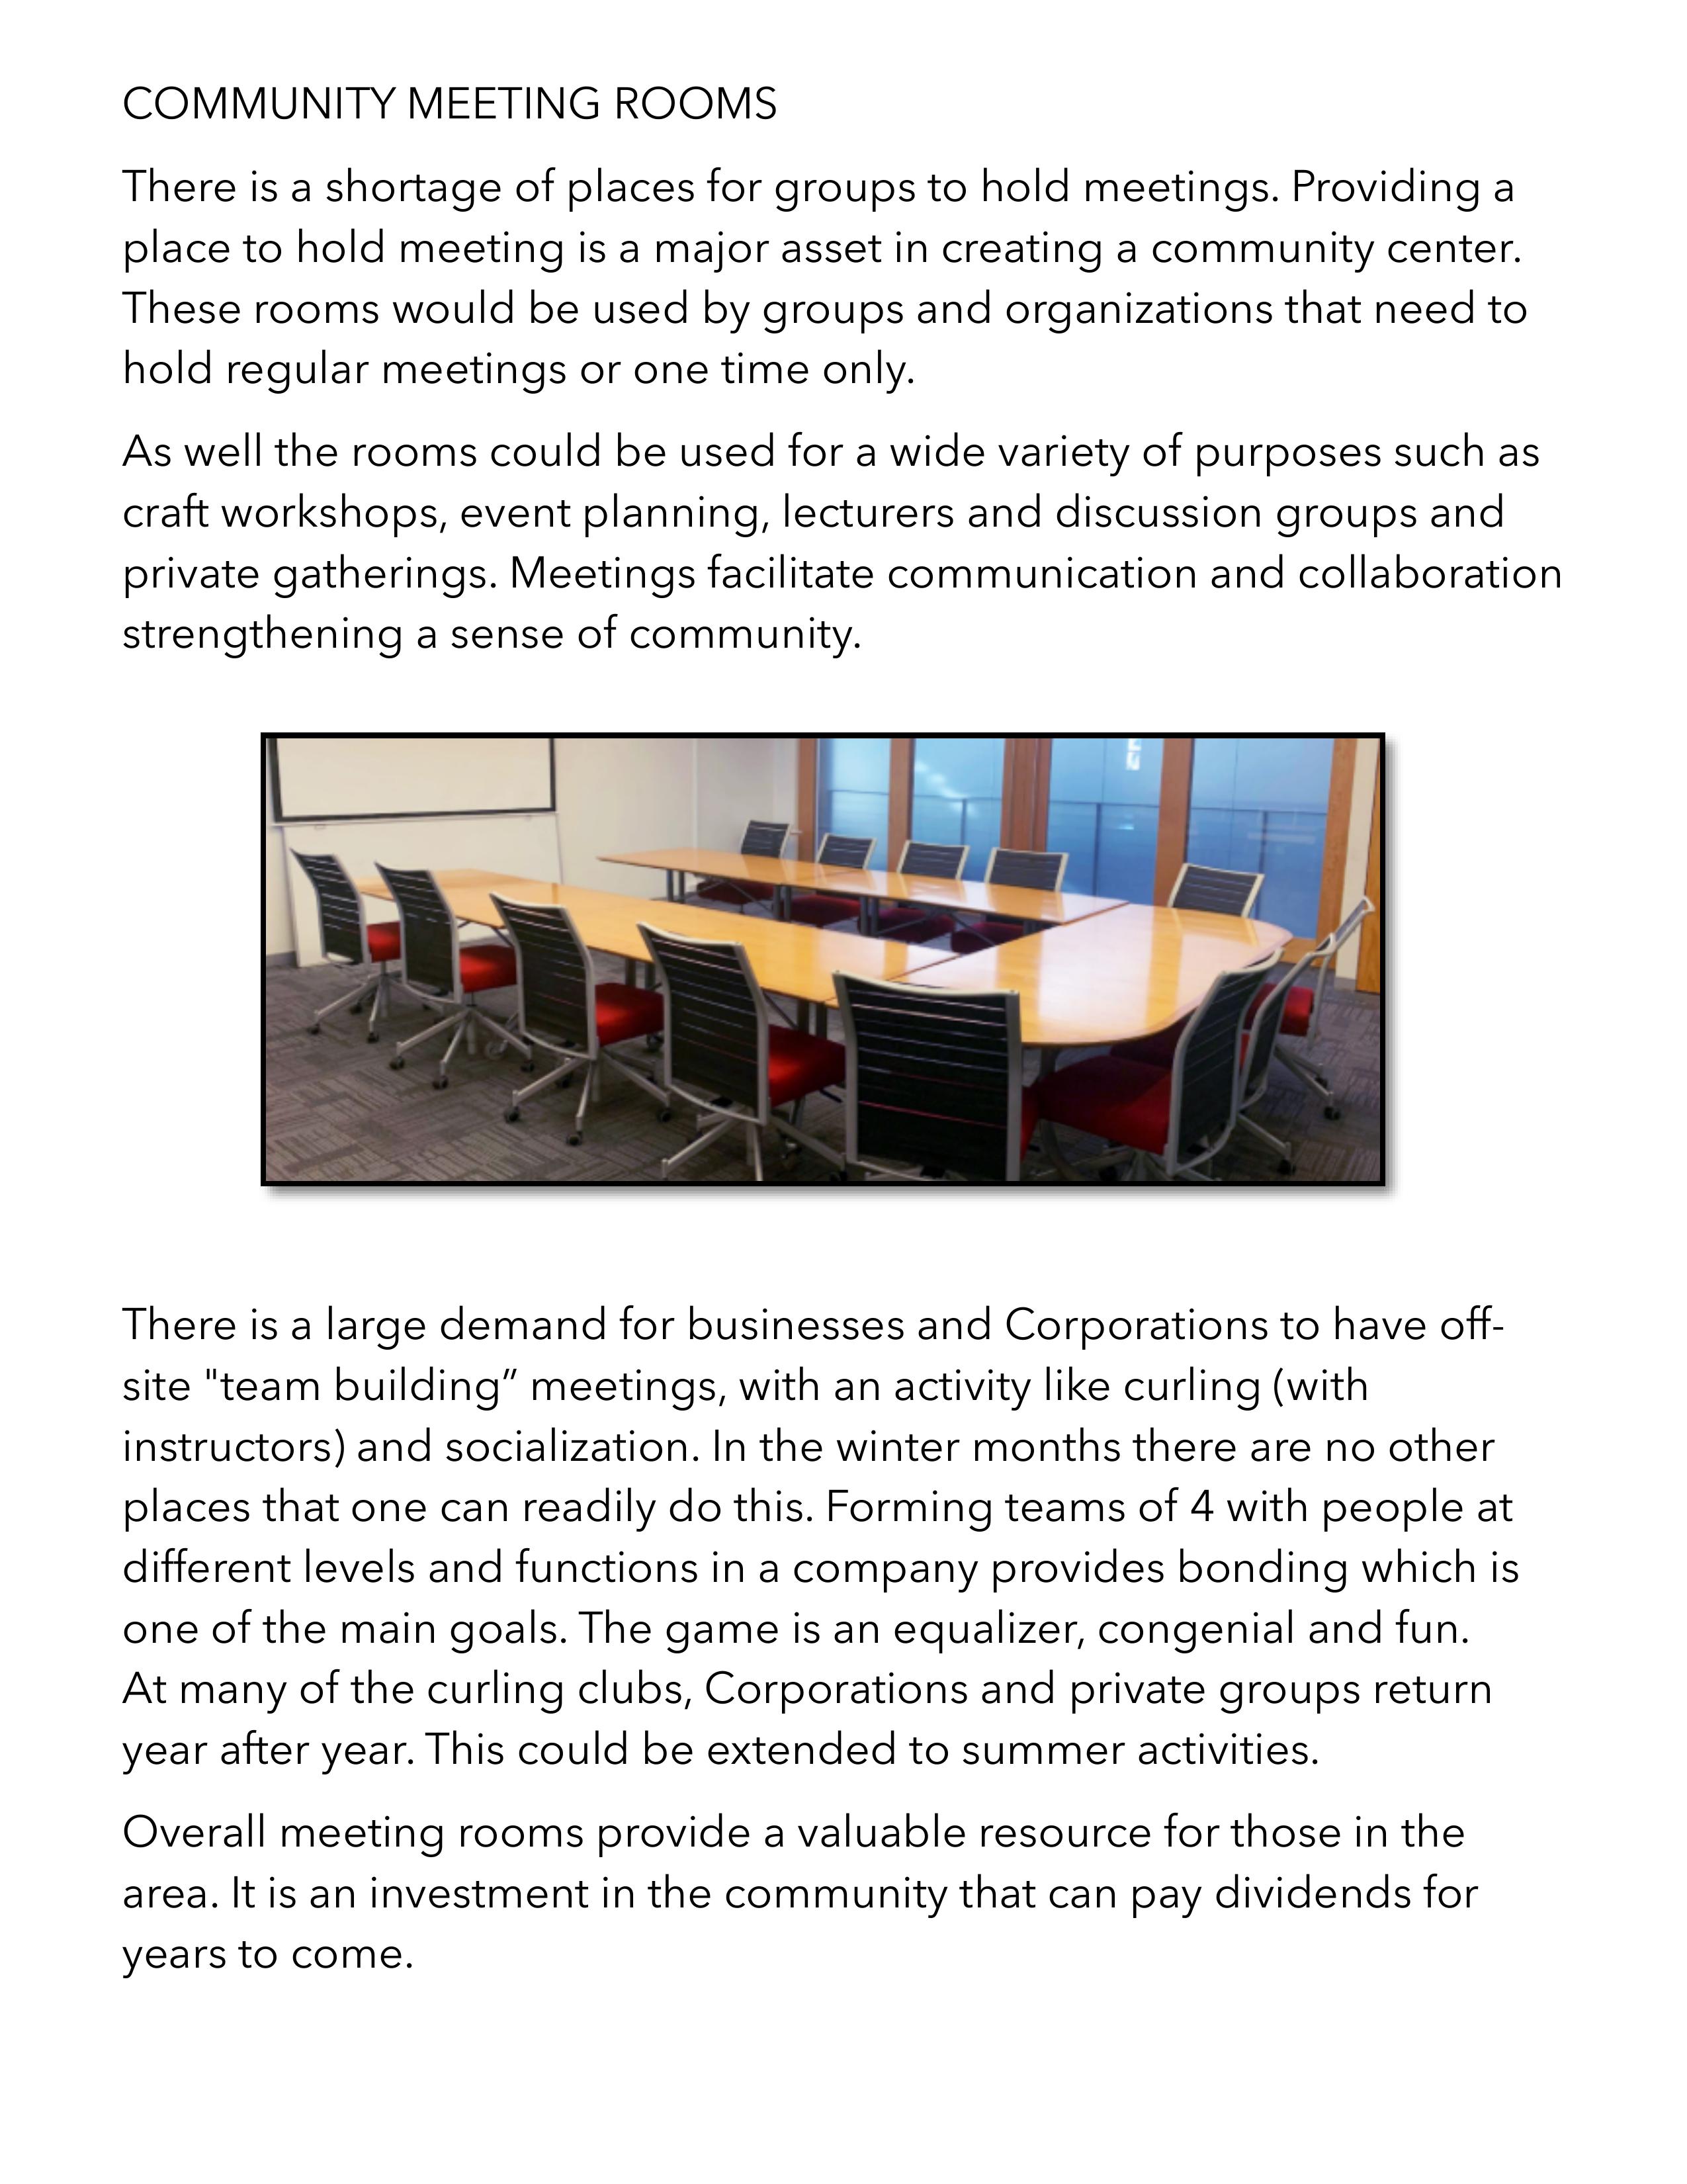 SCVCC Community Meeting Rooms